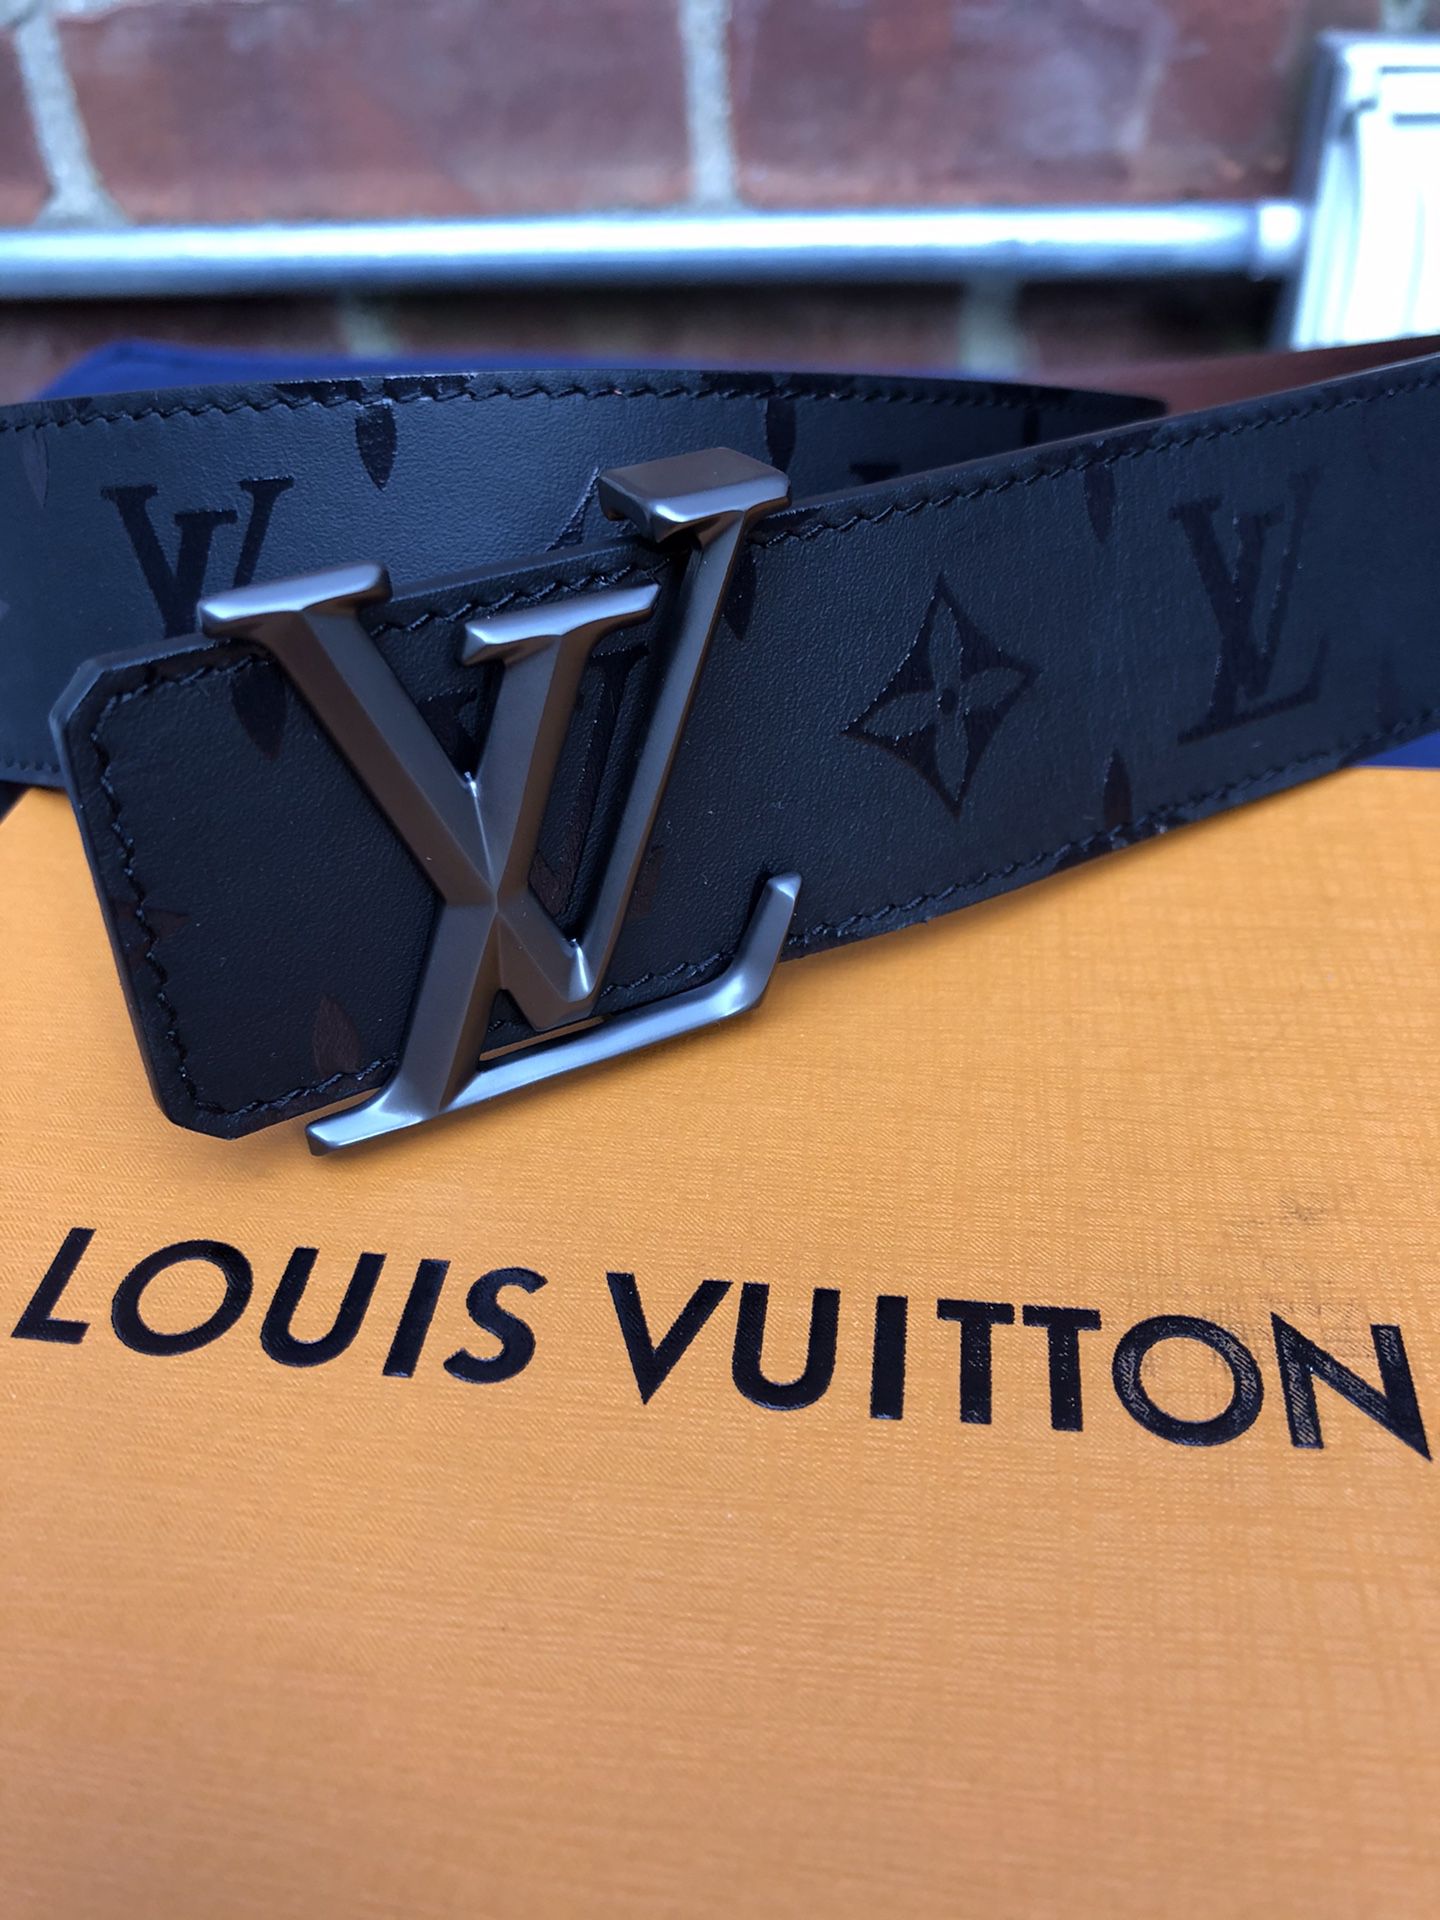 Louis Vuitton belt Pyramid reversible Black and Brown Unisex 115 cm 40/42 inch waist